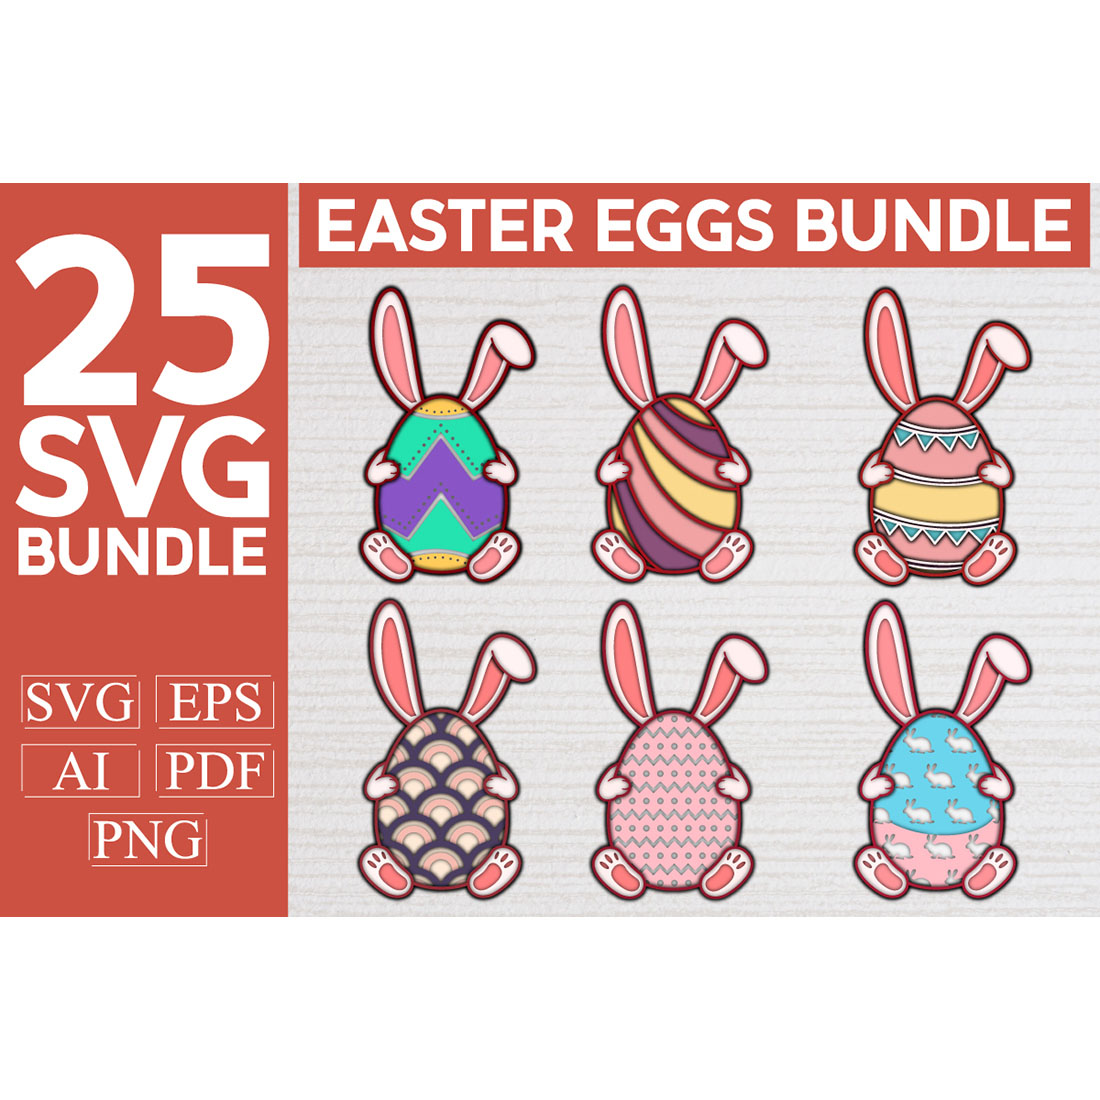 Easter Eggs 3D SVG bundle preview image.